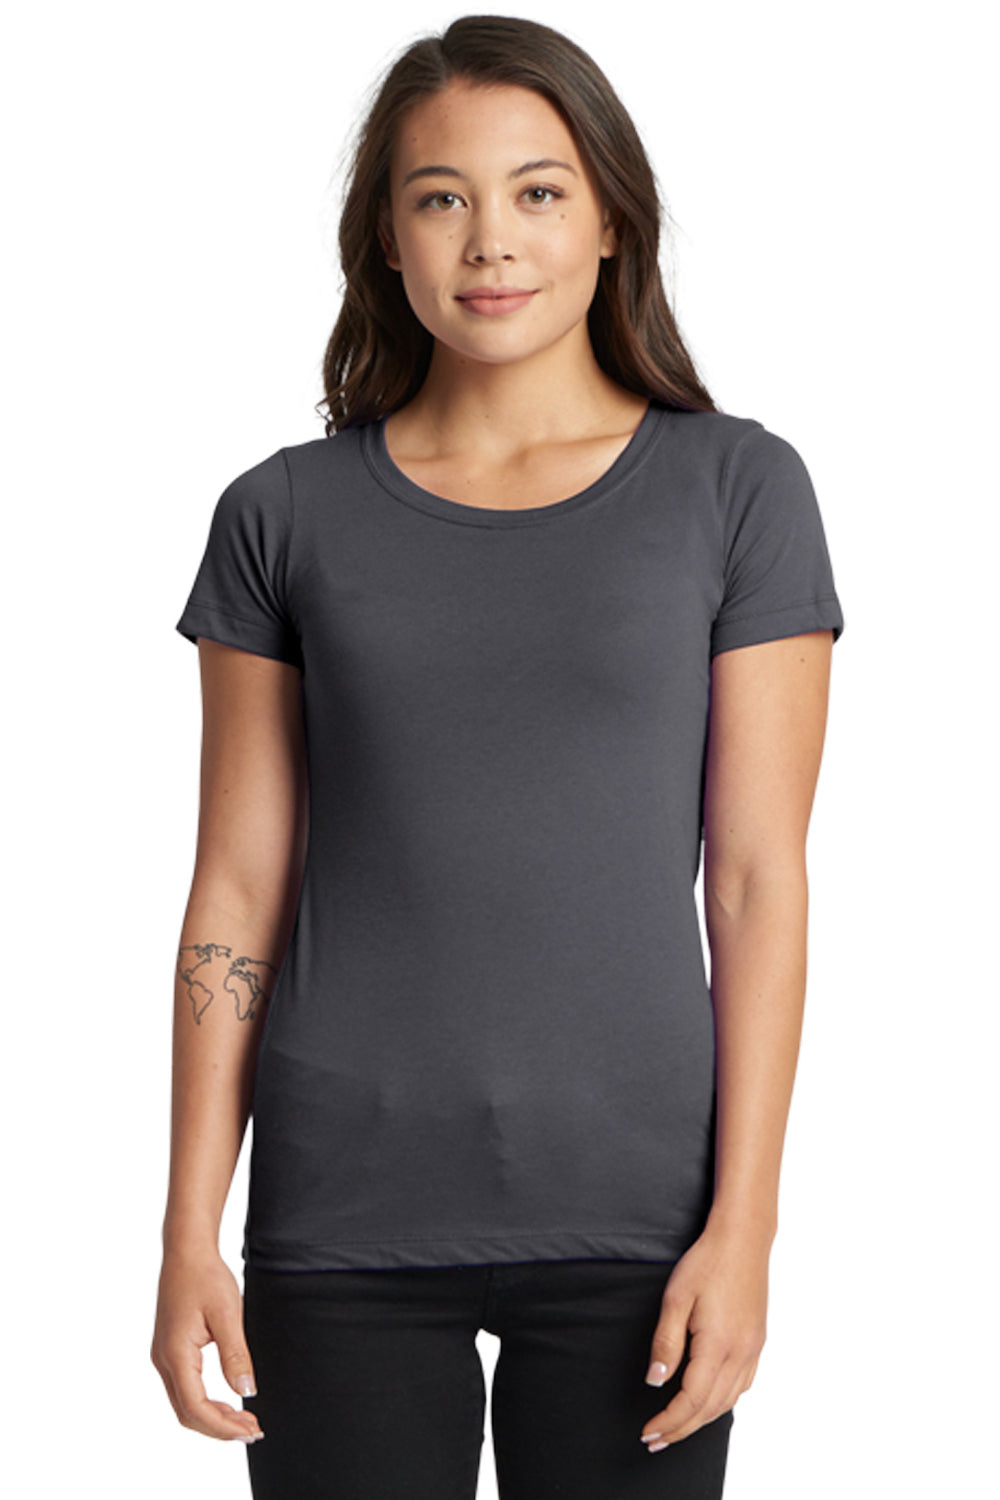 Next Level N1510 Womens Ideal Jersey Short Sleeve Crewneck T-Shirt Dark Grey Front